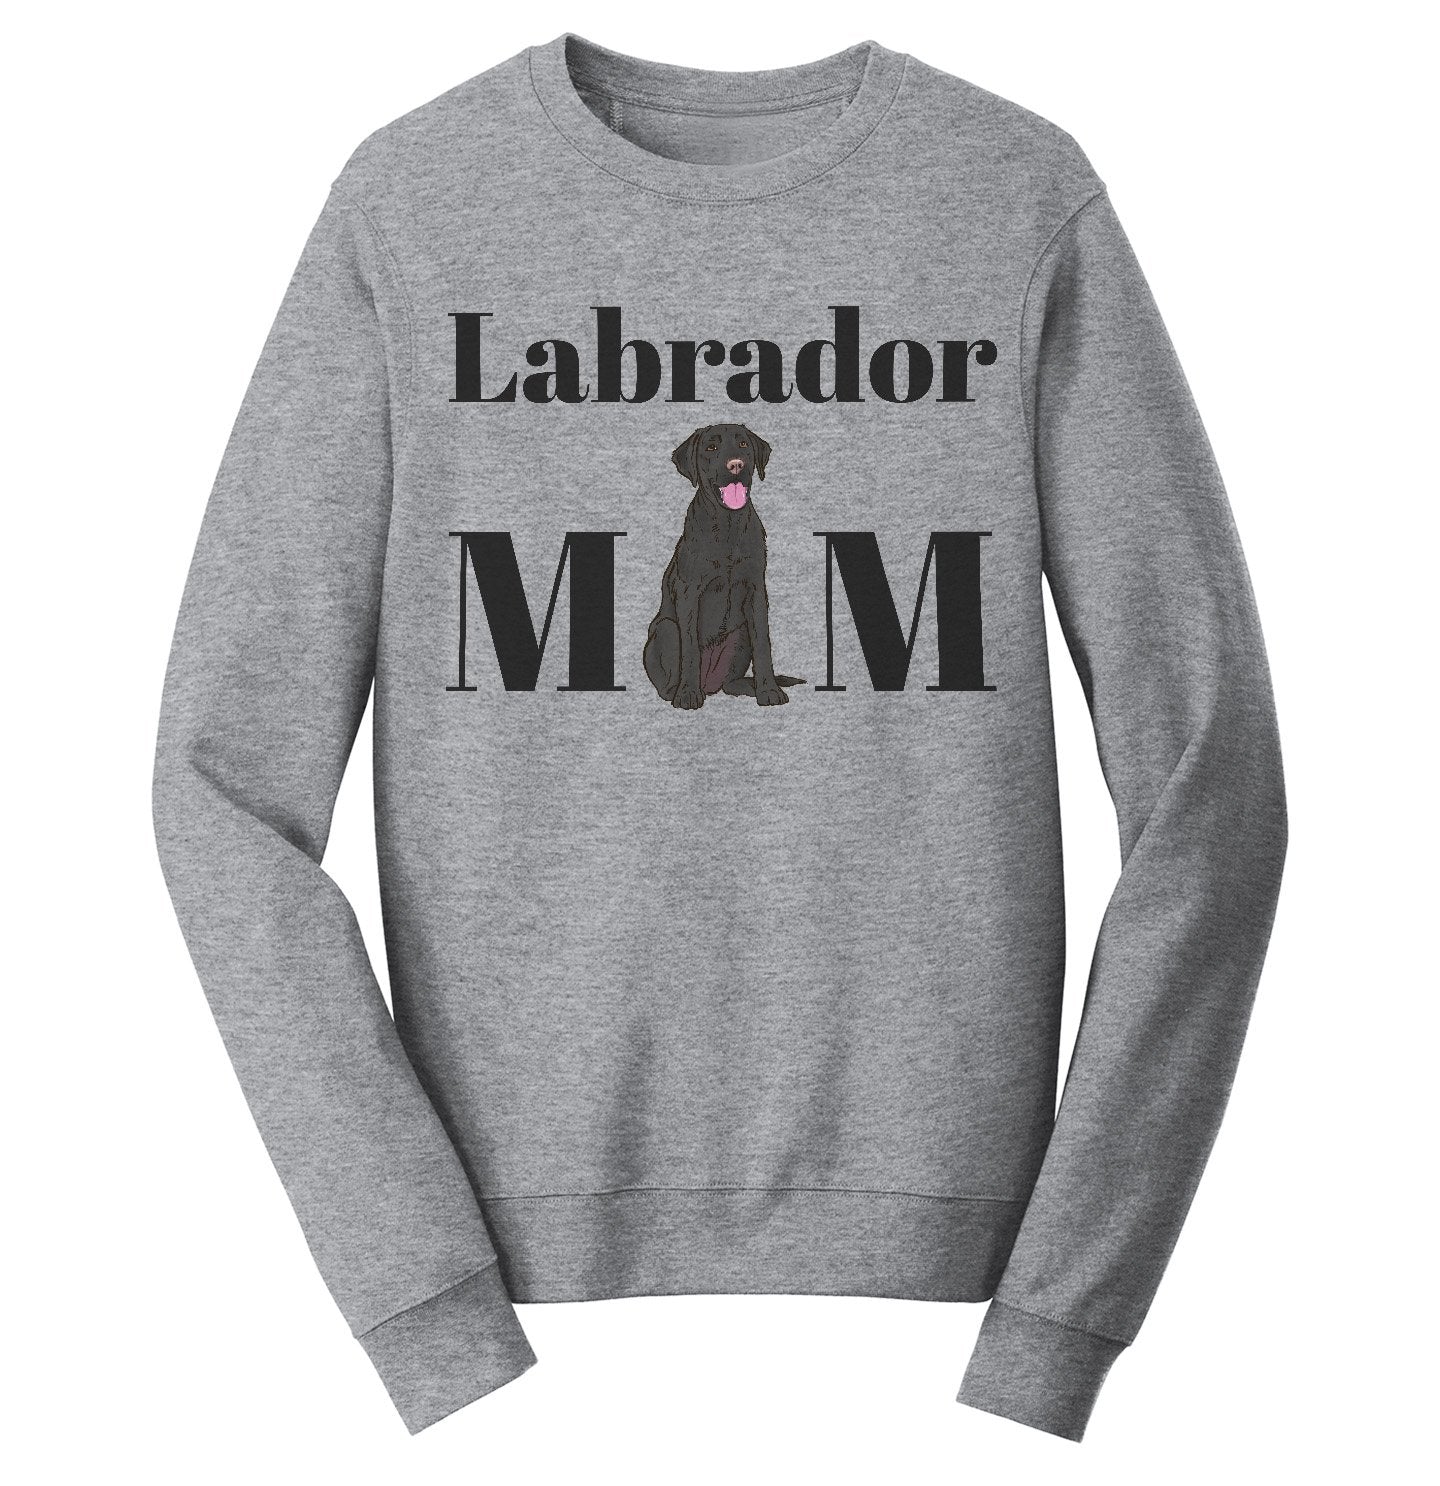 Labradors.com - Black Labrador Mom Illustration - Adult Unisex Crewneck Sweatshirt